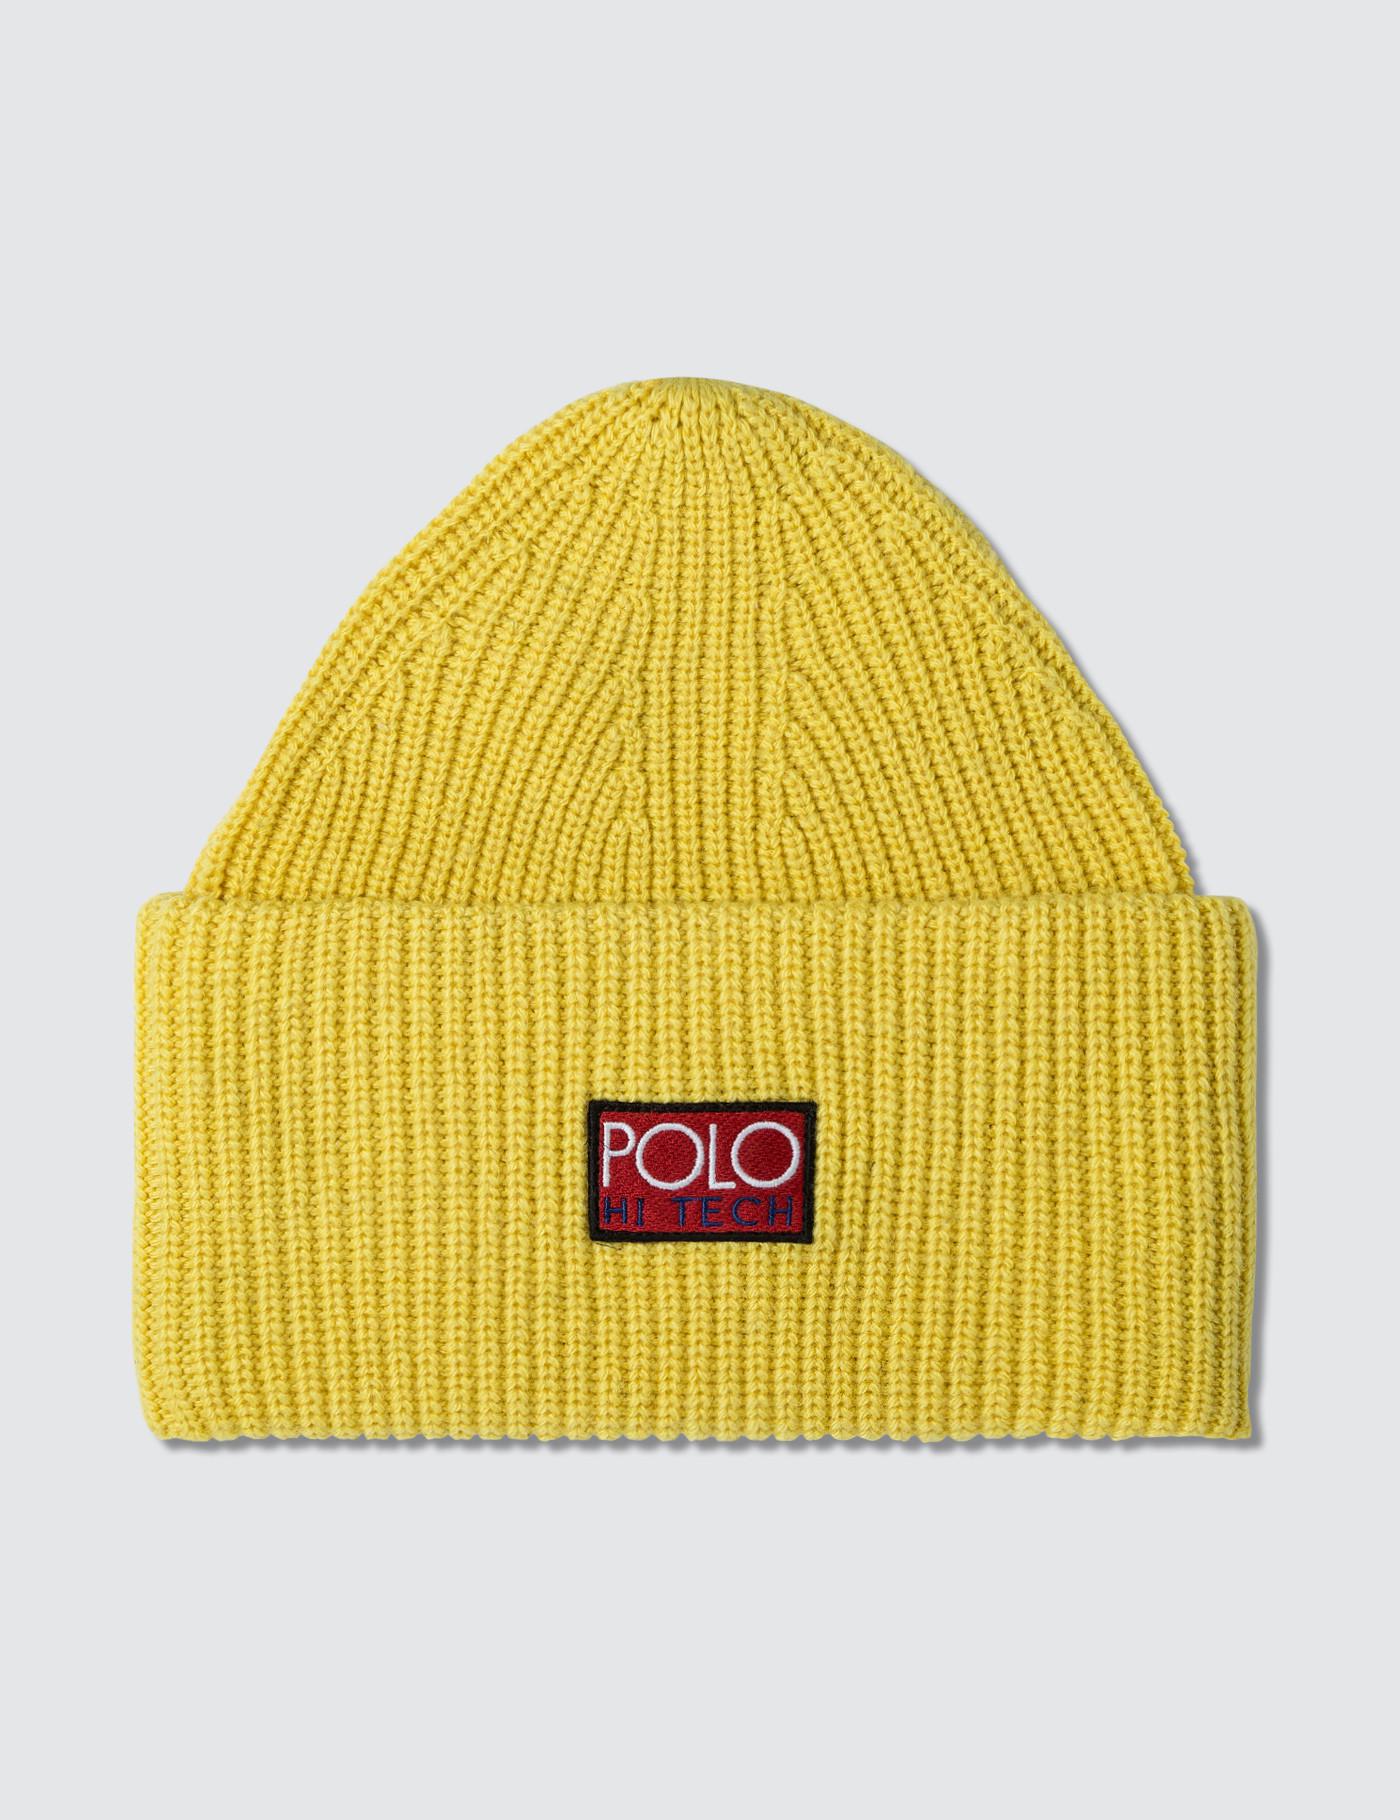 Polo Ralph Lauren Synthetic Hi Tech Knit Beanie in Yellow for Men - Lyst